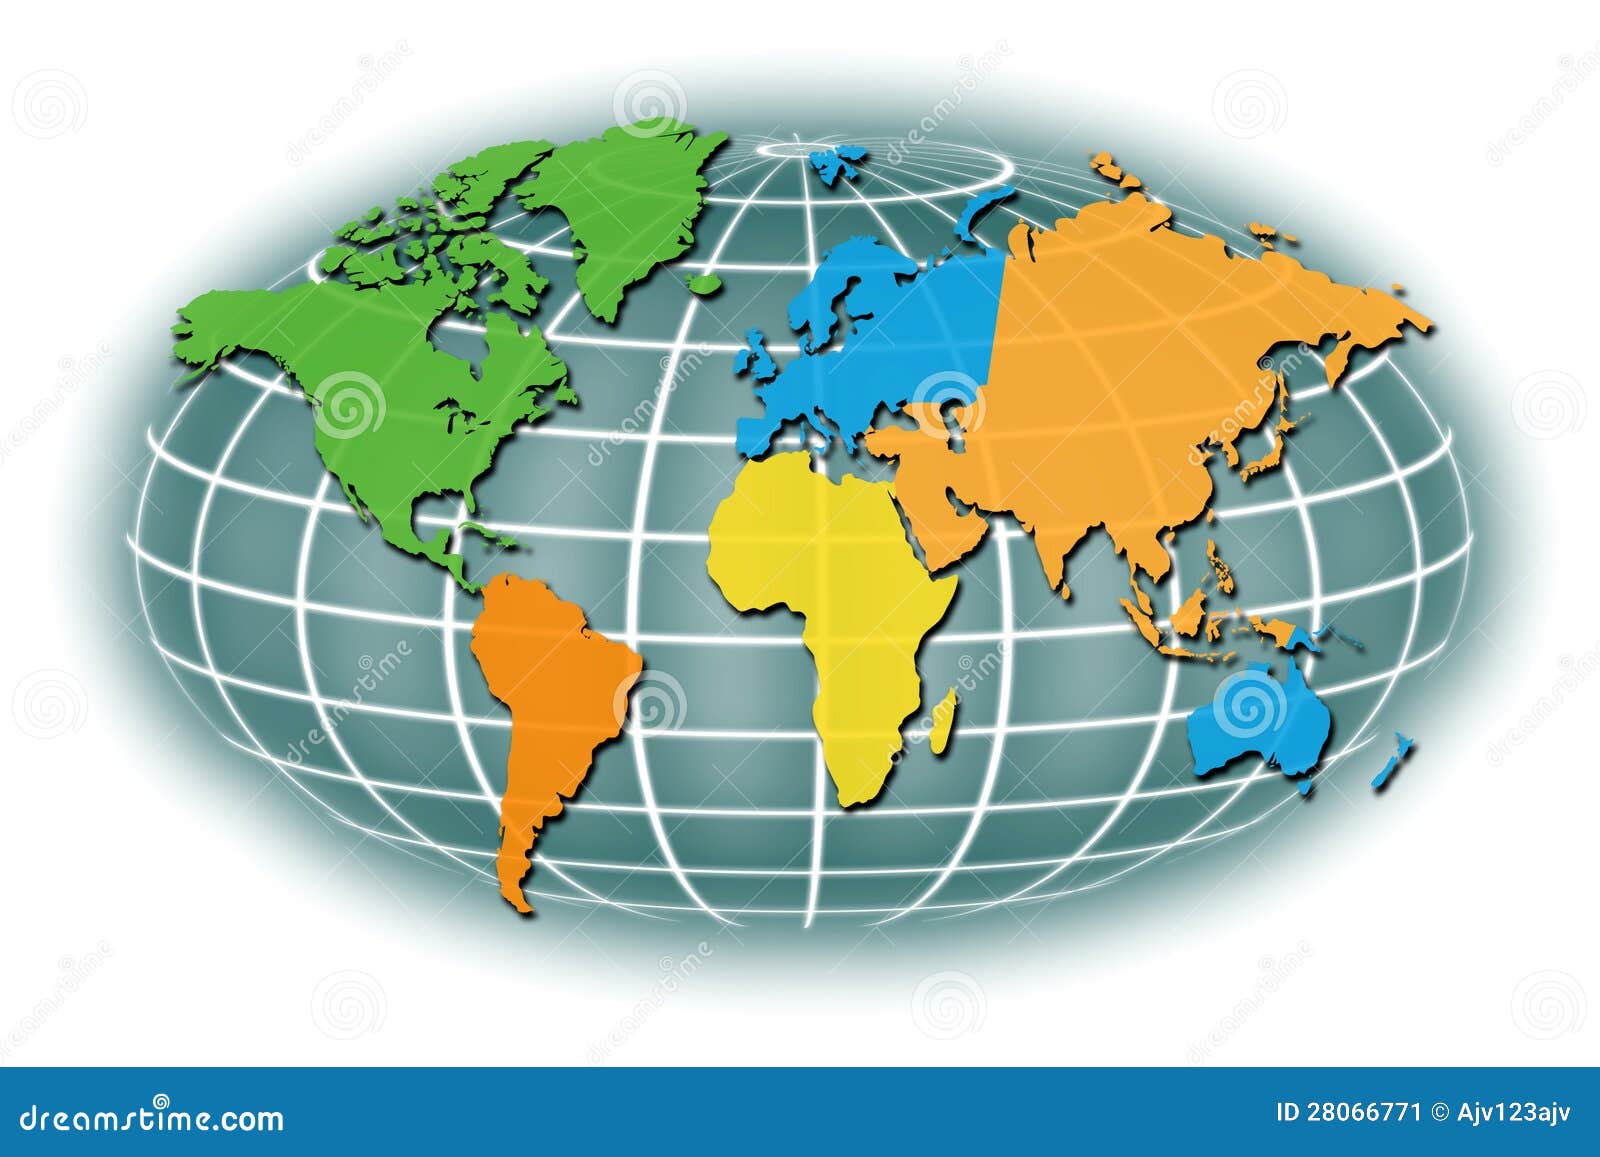 world map regions